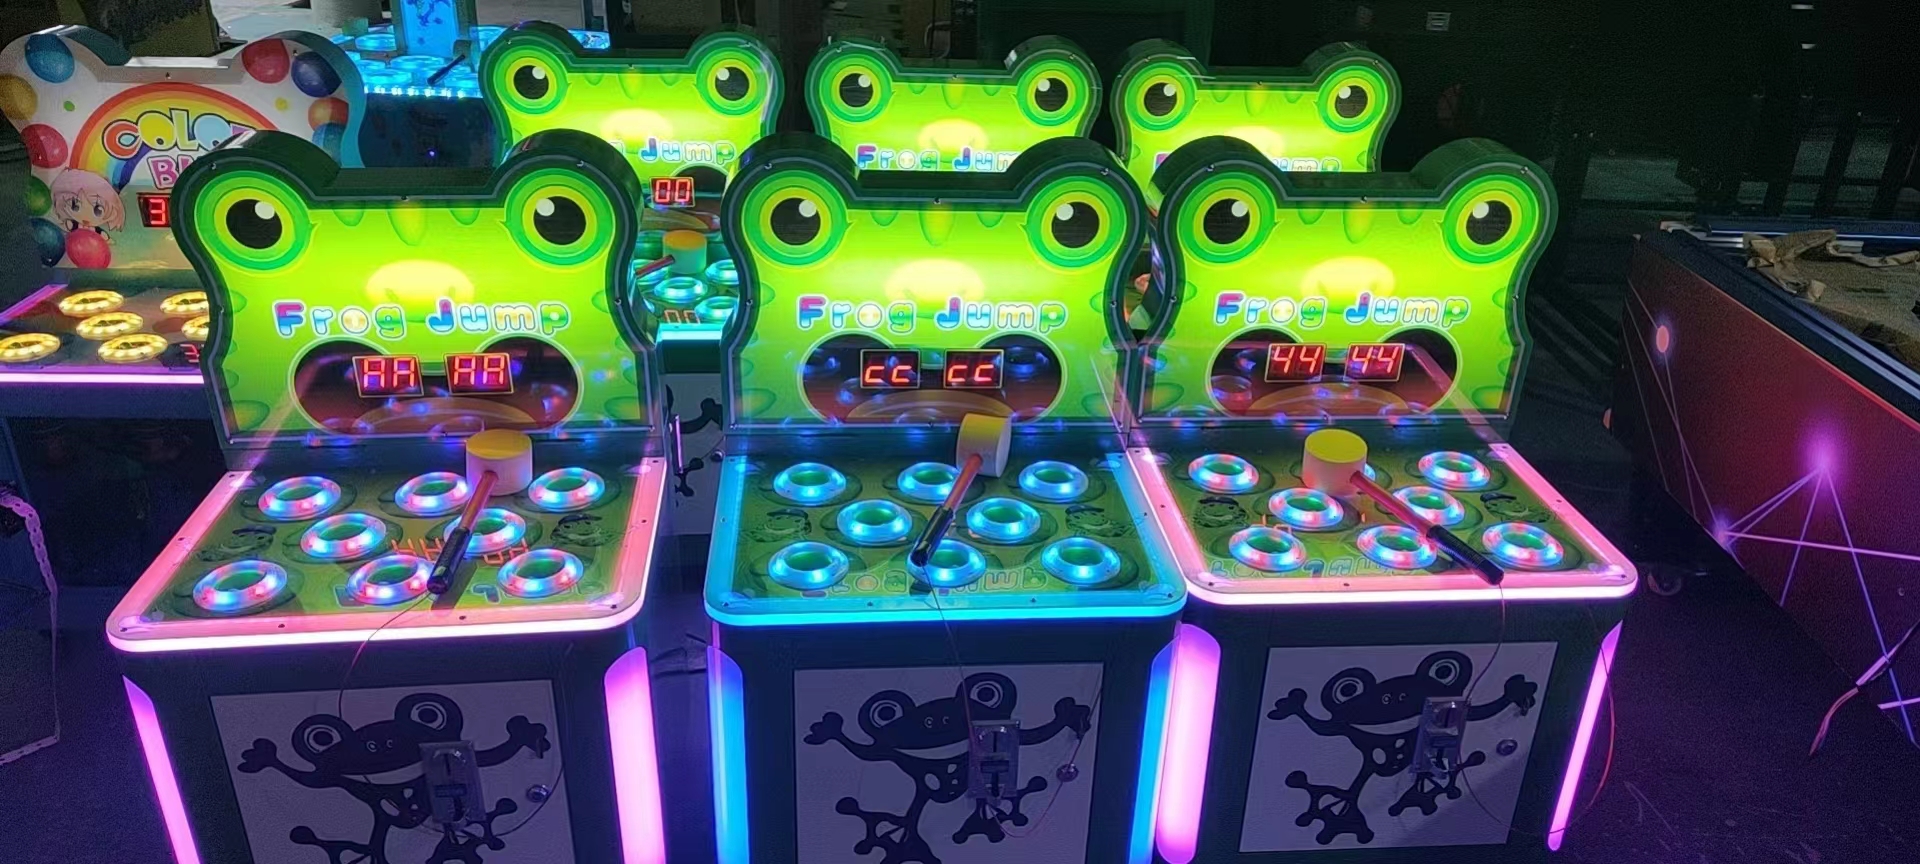 Kids Whac a mole Arcade Sports Game Machine Spongebob Arcade for Kids Tomy Arcade